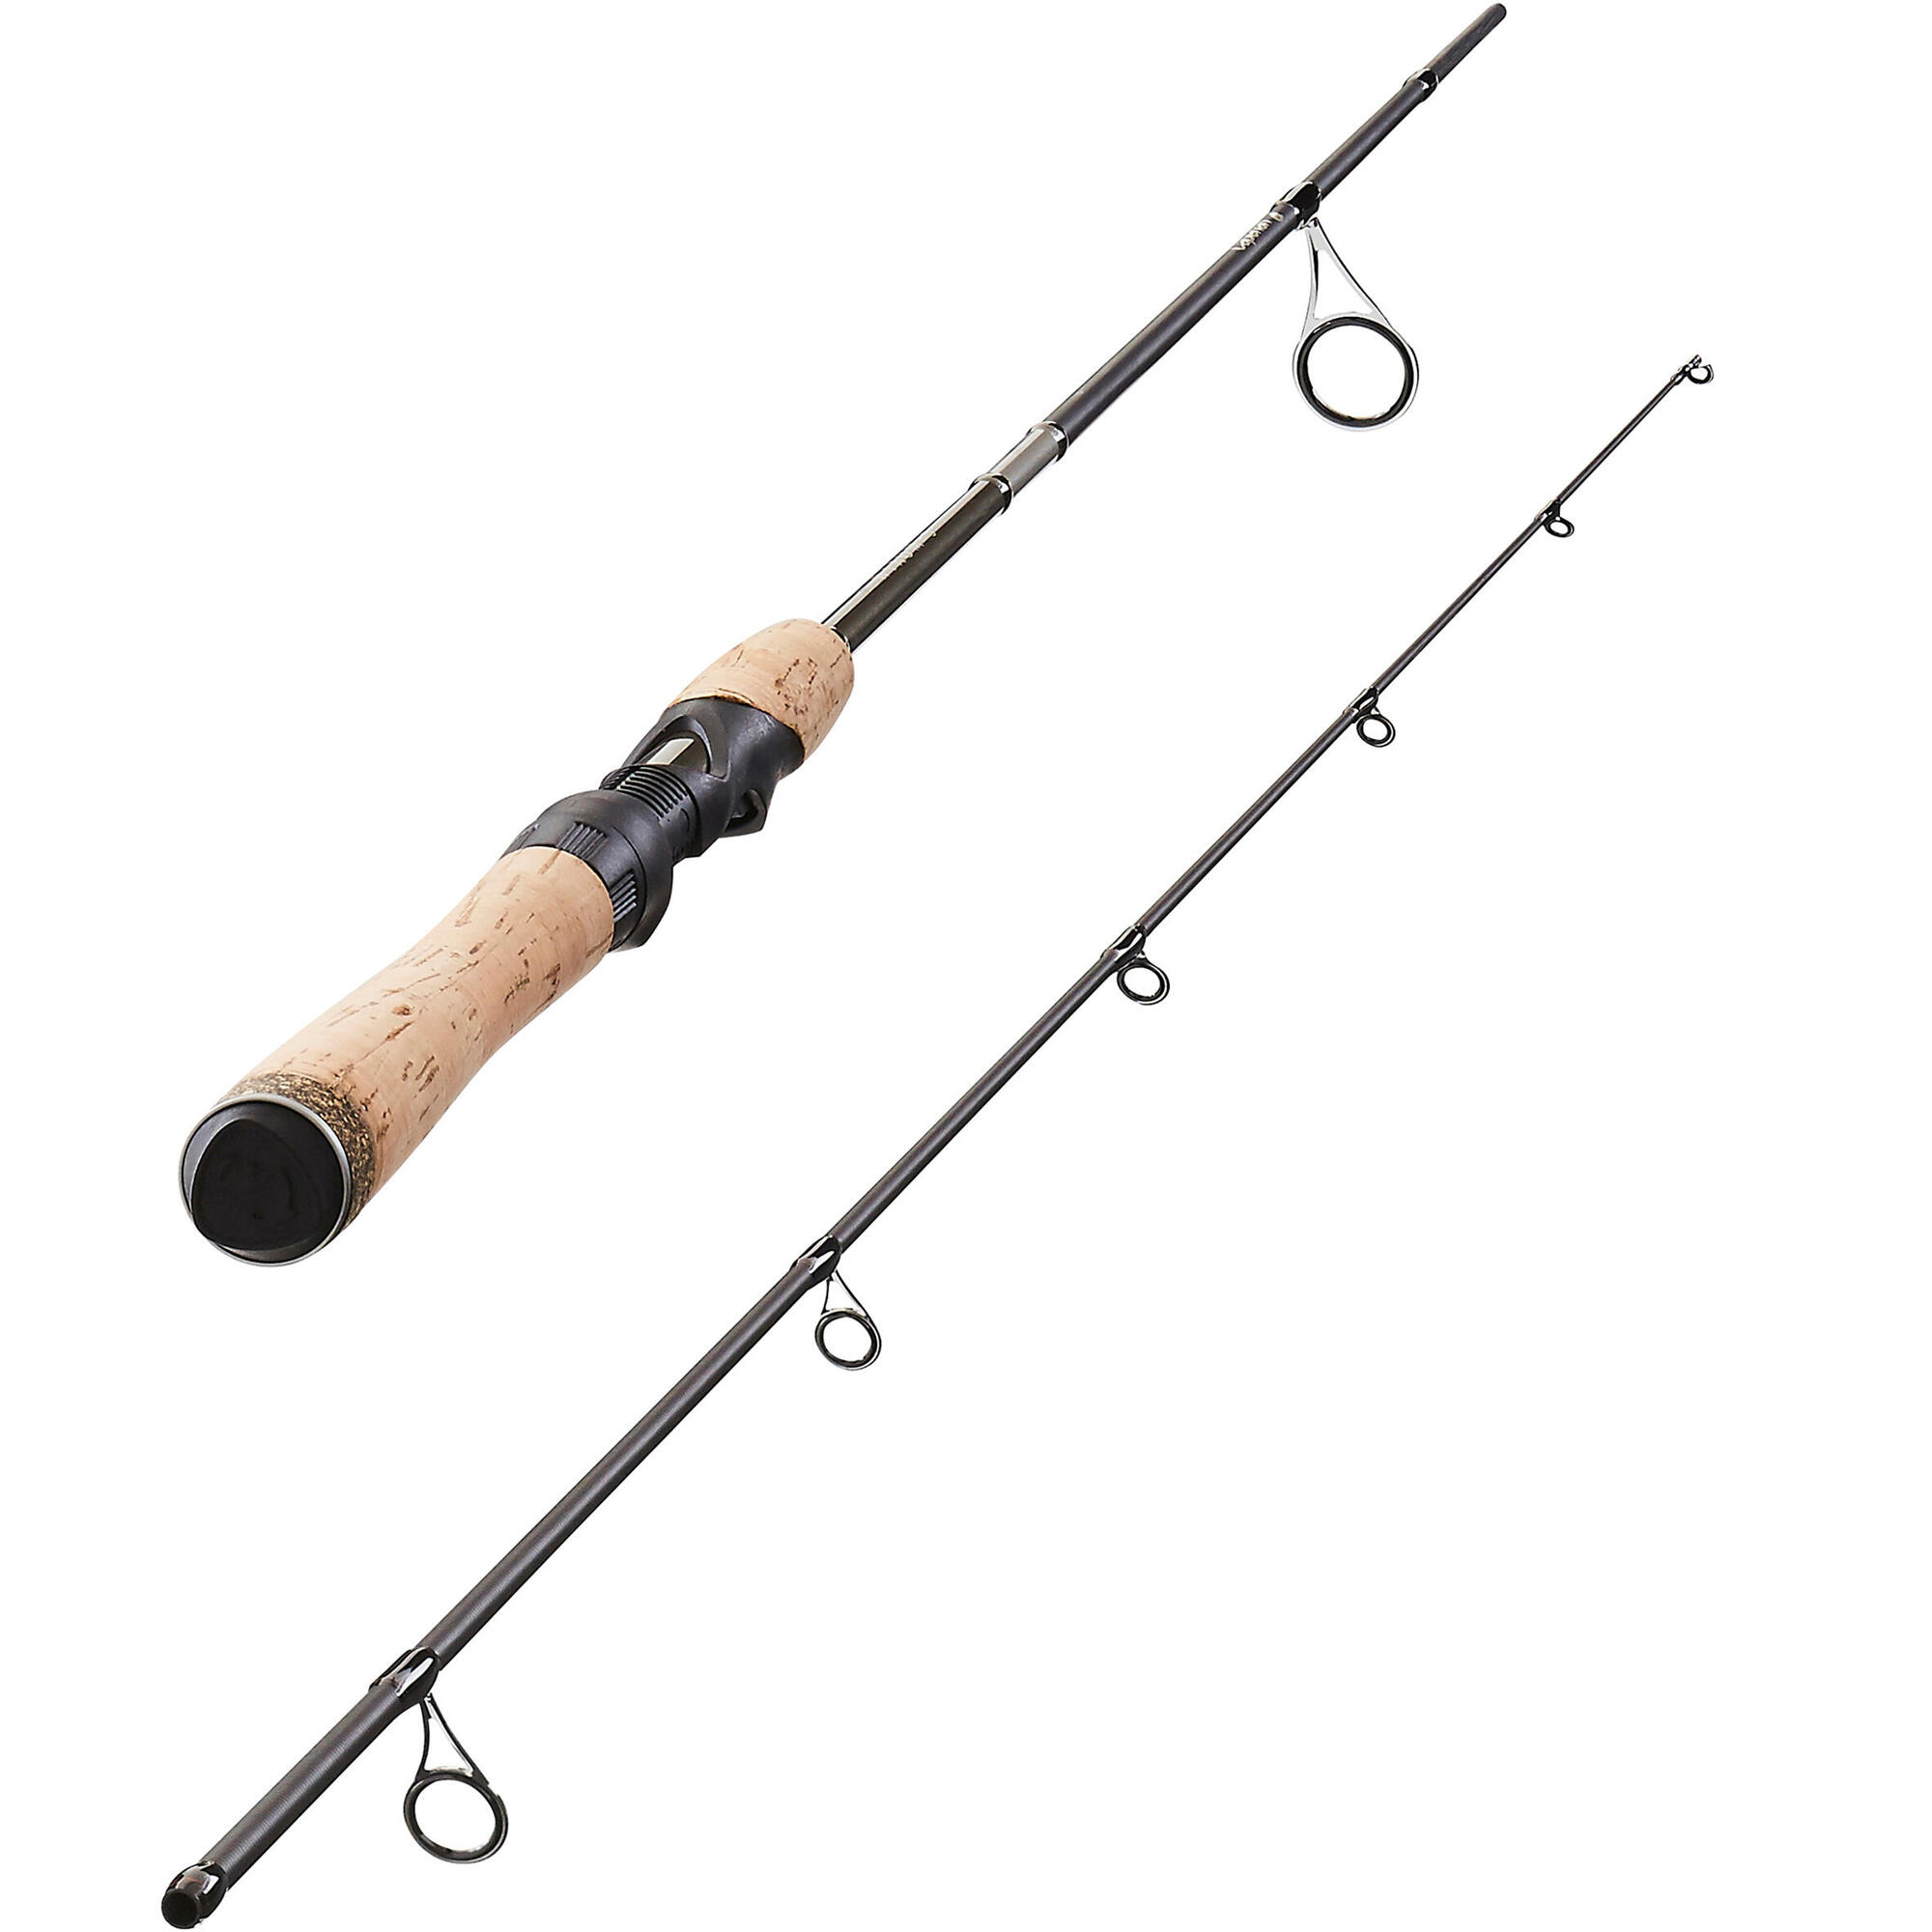 caperlan fishing rod